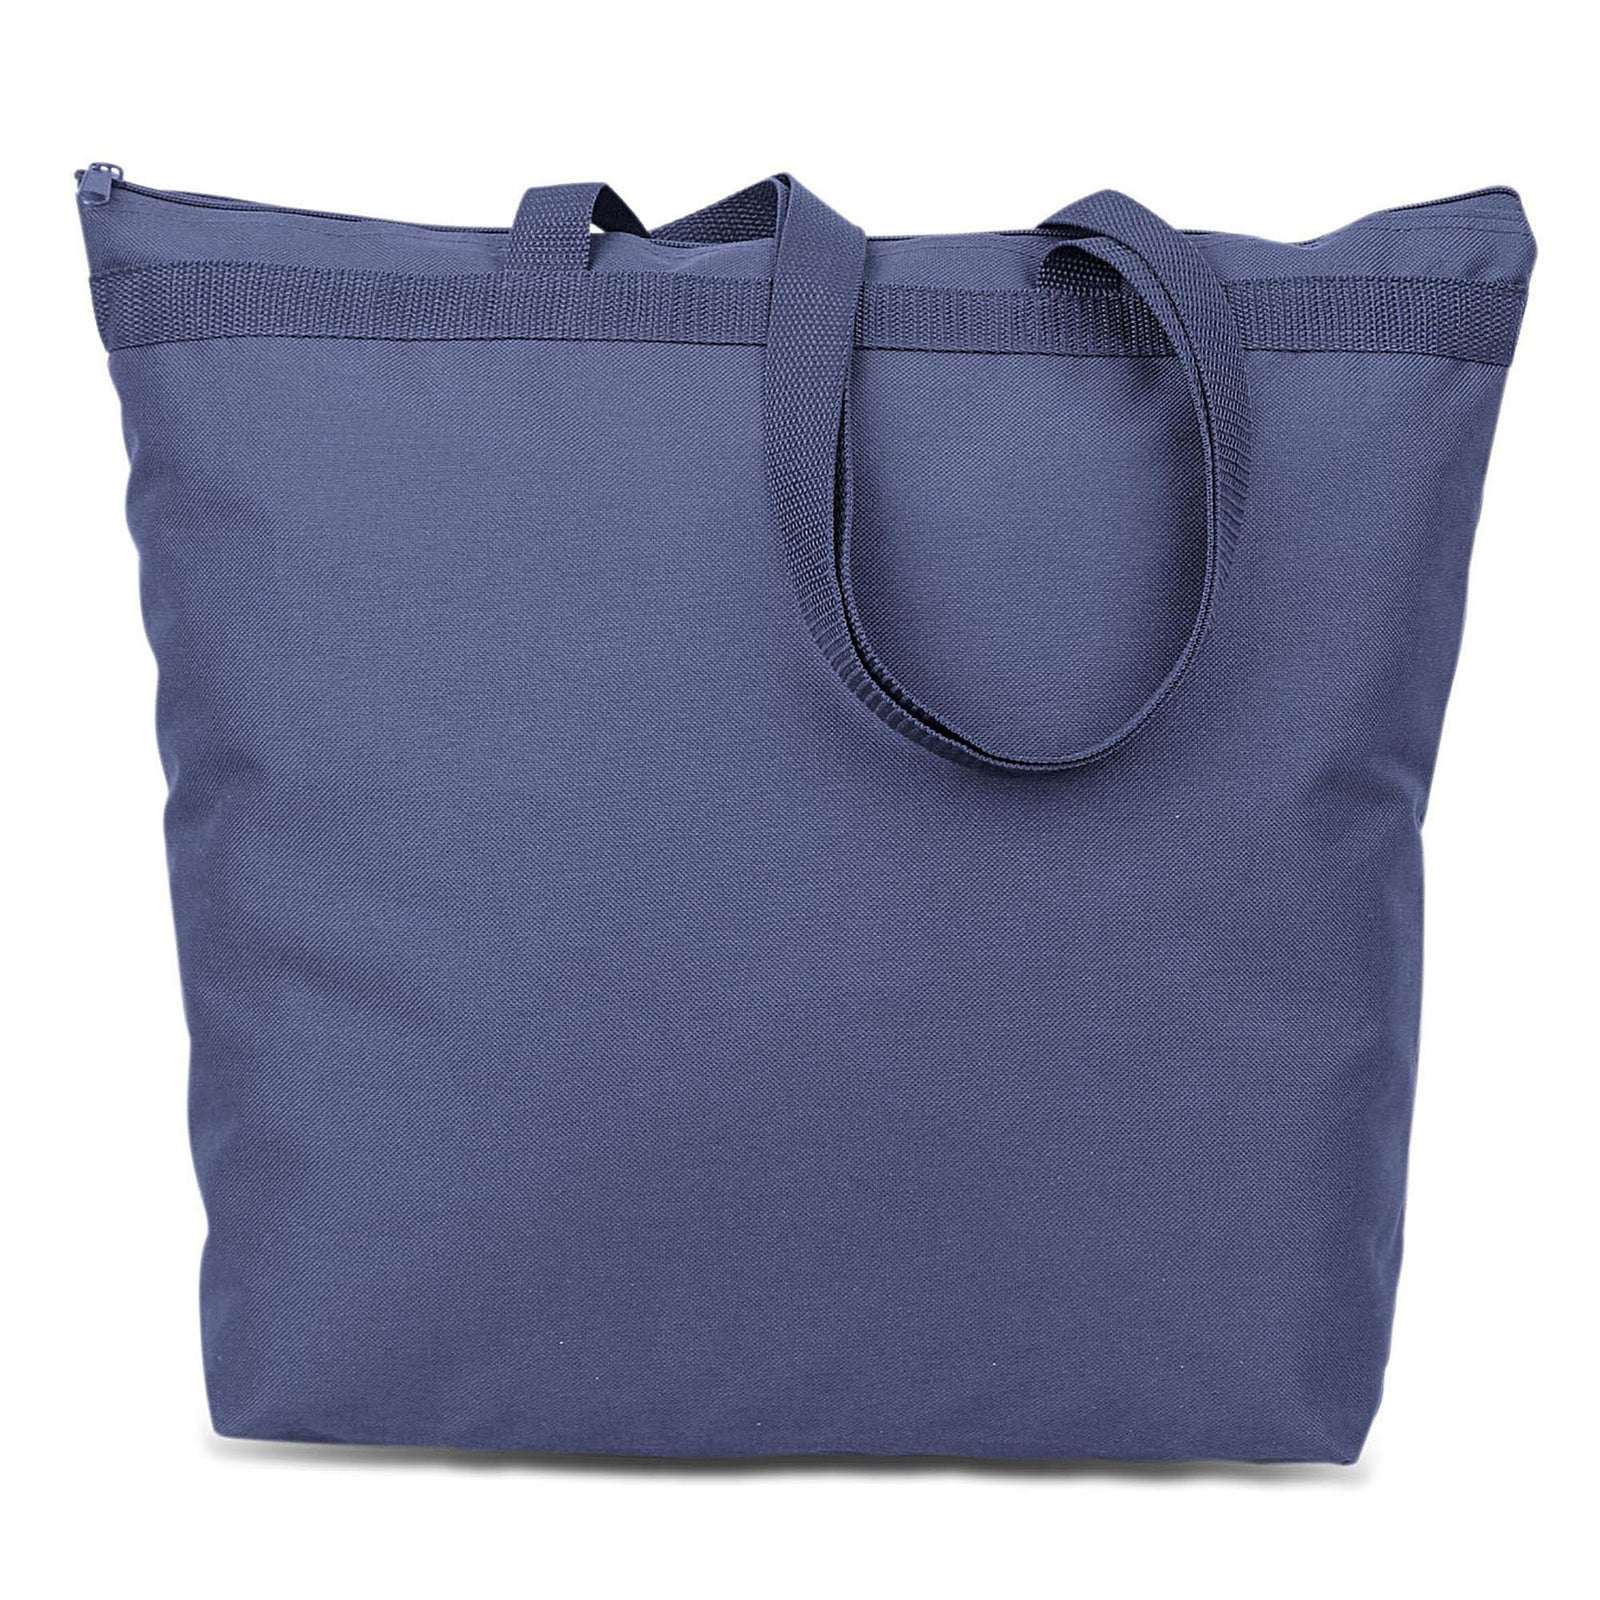 Nacho Average Teacher Tote Bag - Large Canvas Zipper Bag - Funny Christmas Gift for Teacher